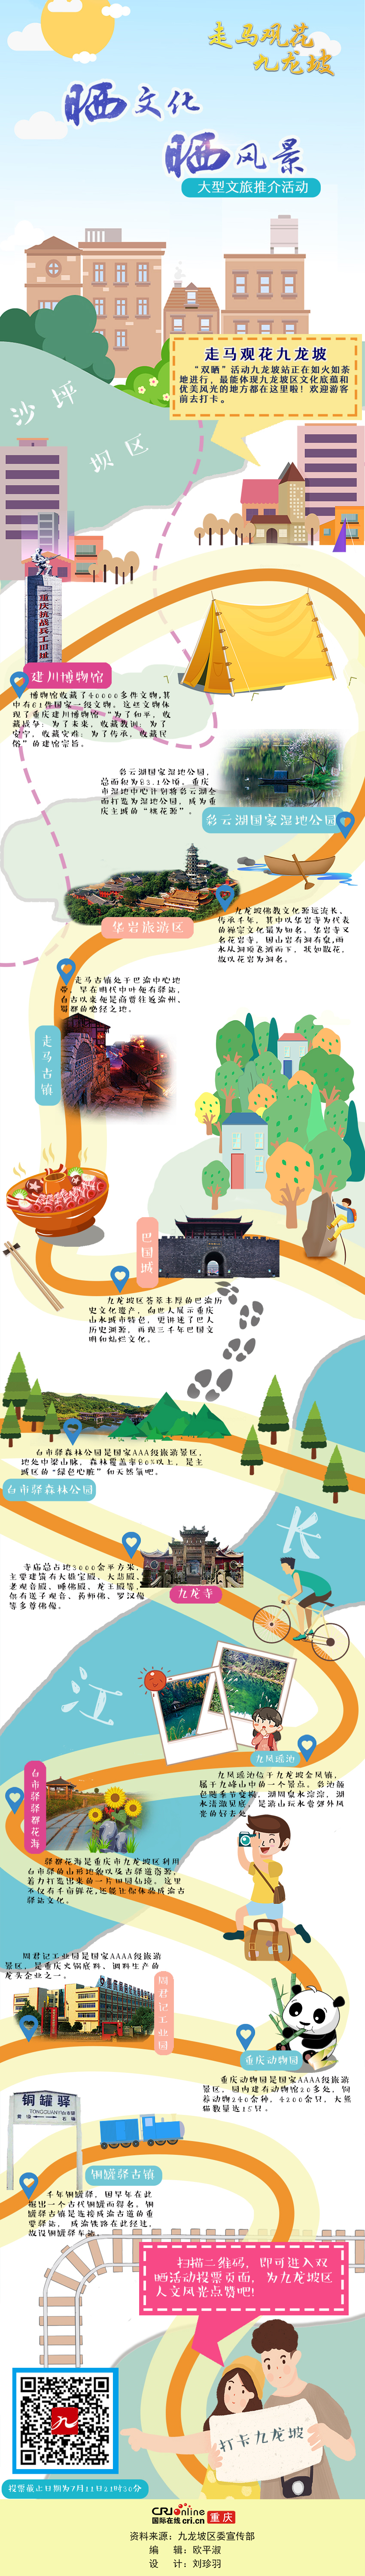 【CRI专稿 列表】晒文化晒风景 九龙坡邀市民“走马观花”